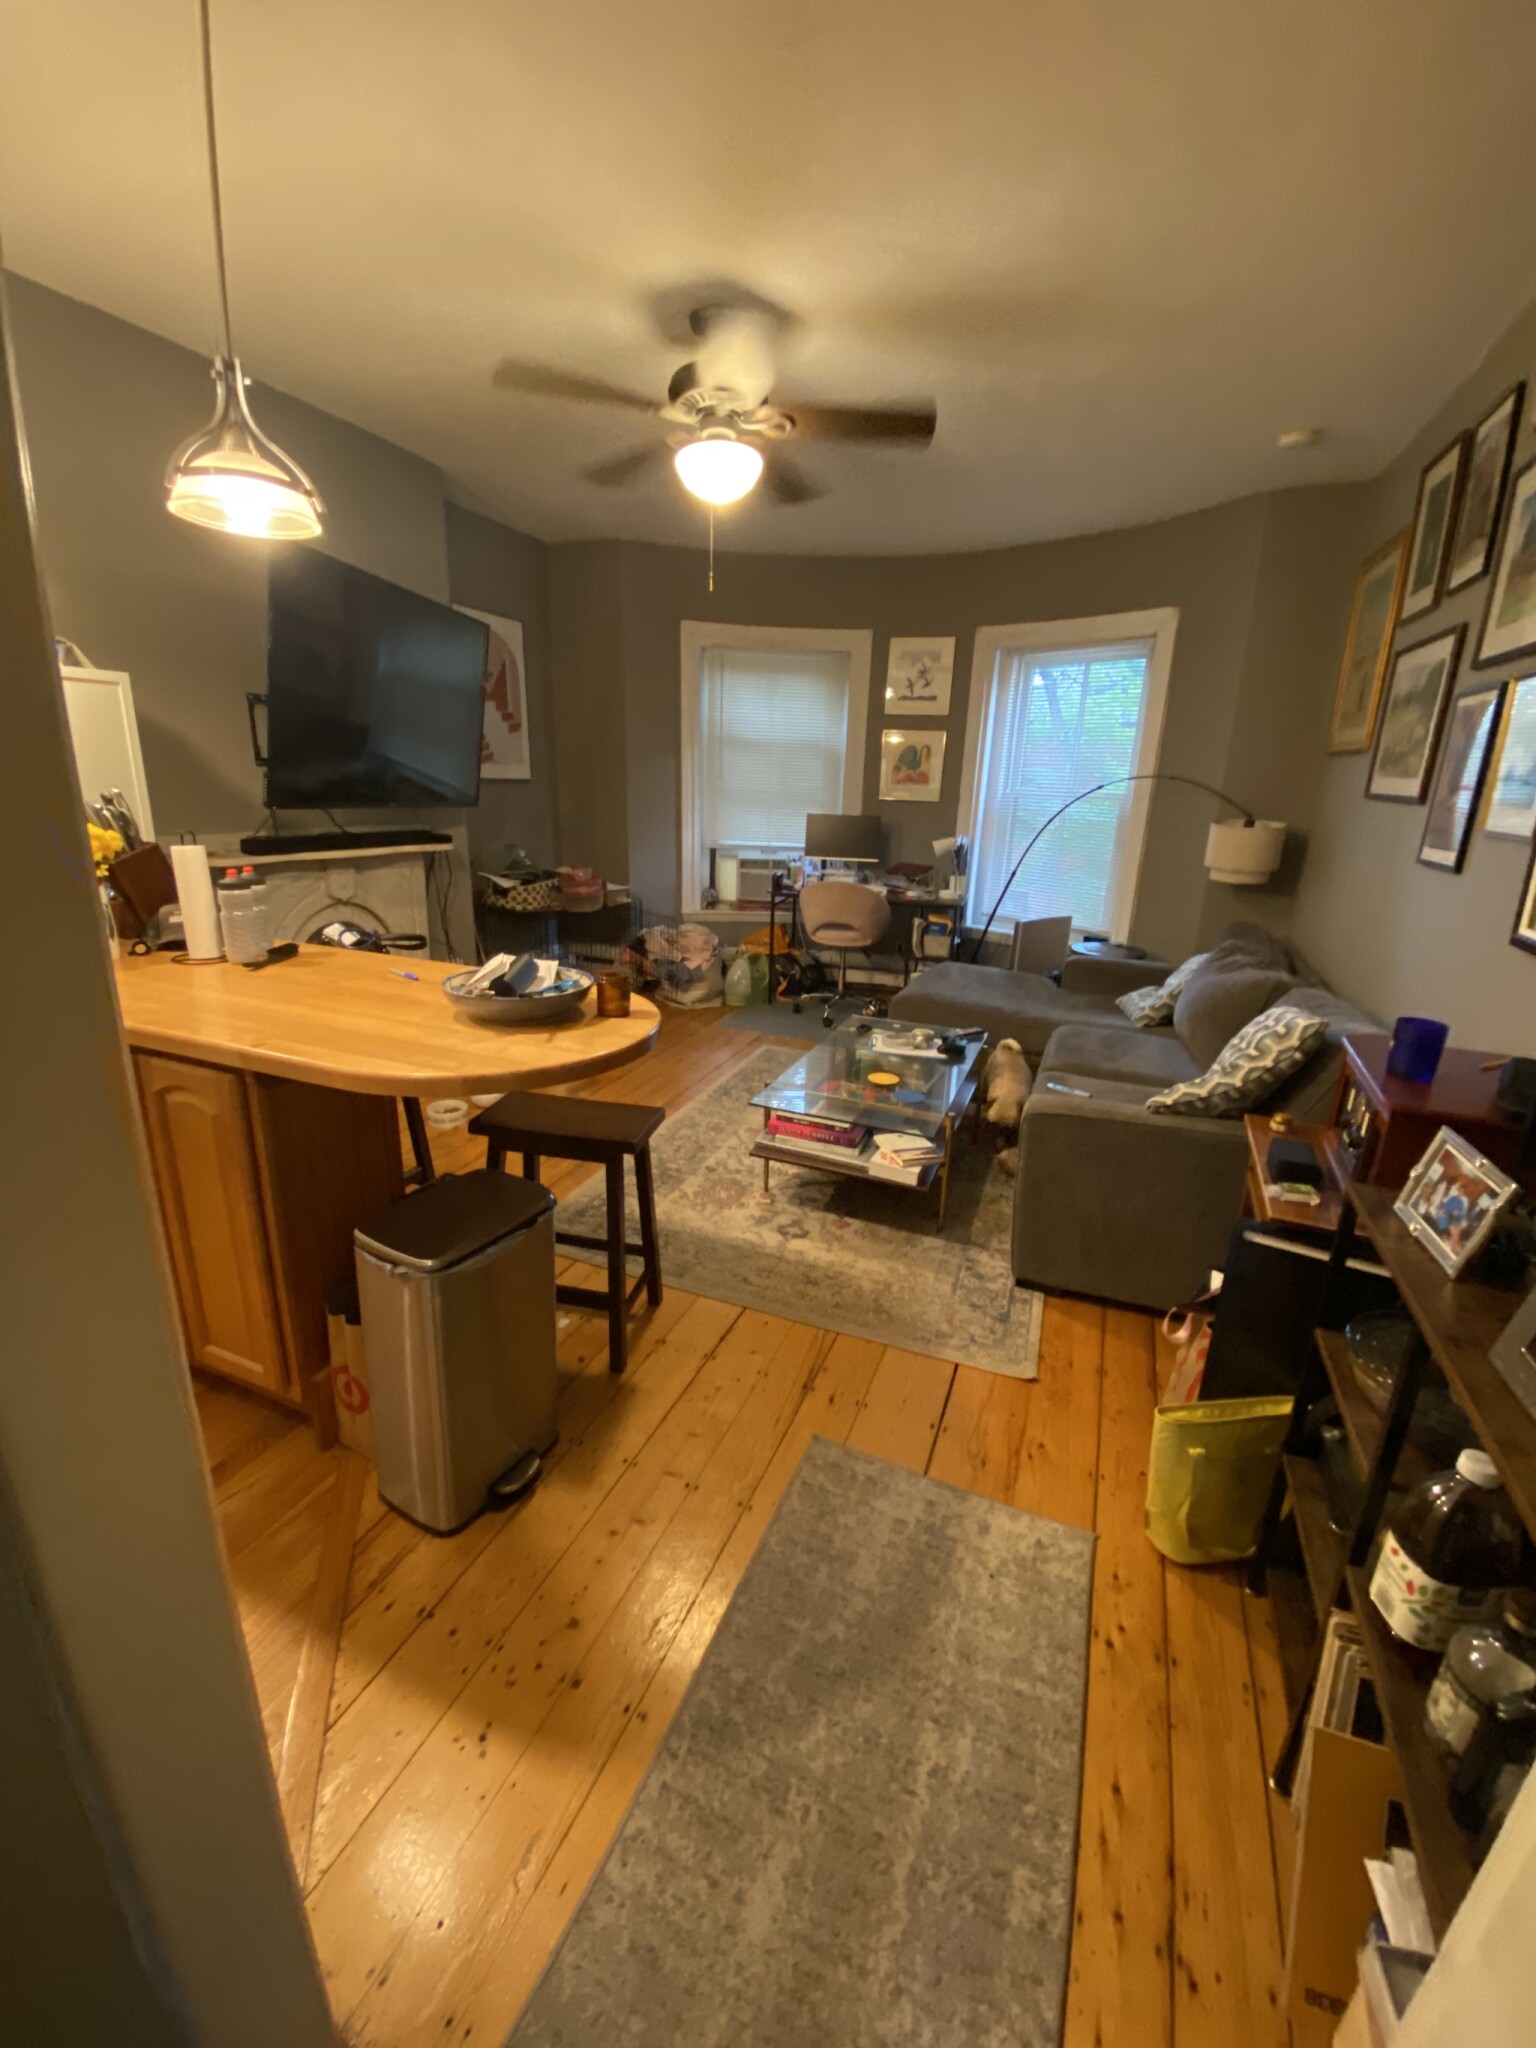 Photos of apartment on Wareham St.,Boston MA 02118